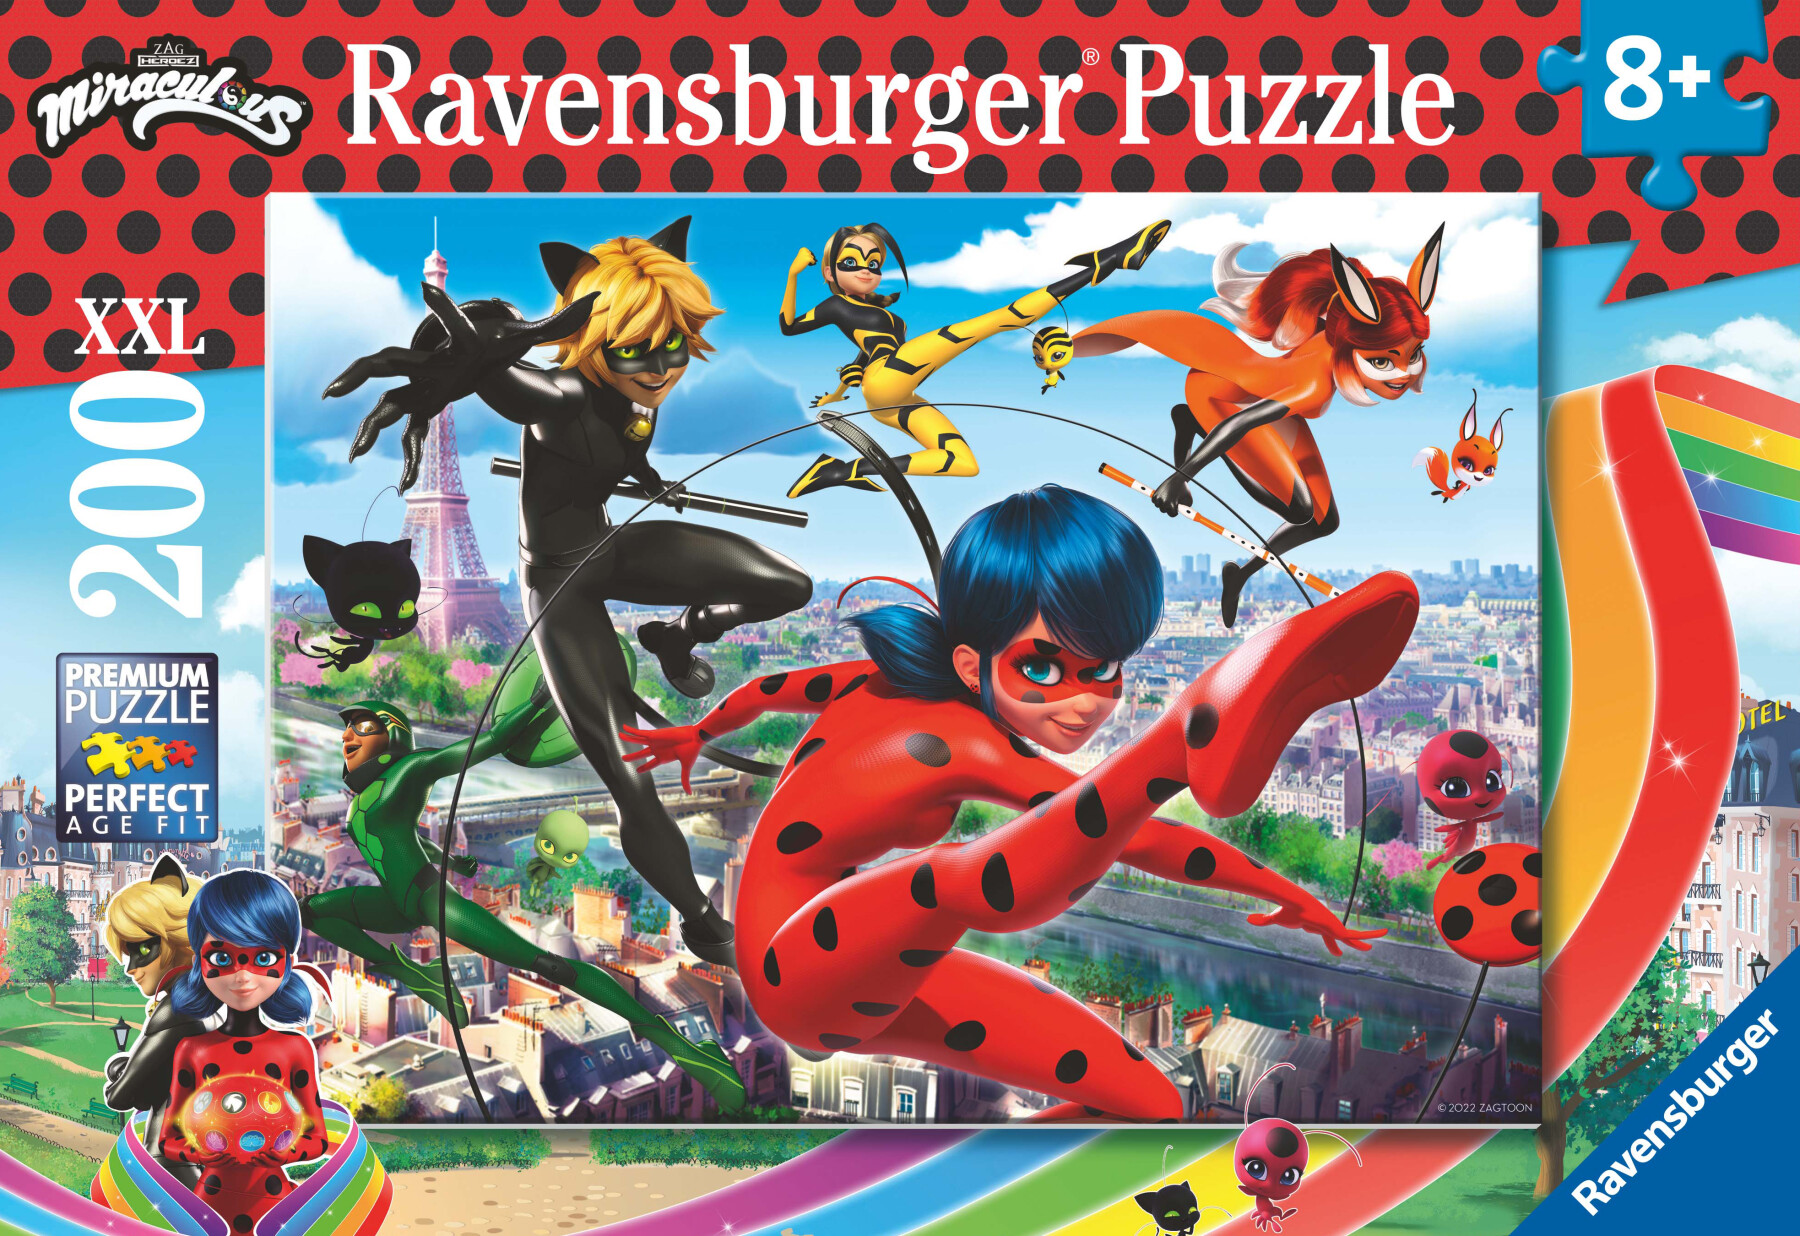 Ravensburger - puzzle miraculous, 200 pezzi xxl, età raccomandata 8+ anni - Miraculous - Ladybug, RAVENSBURGER